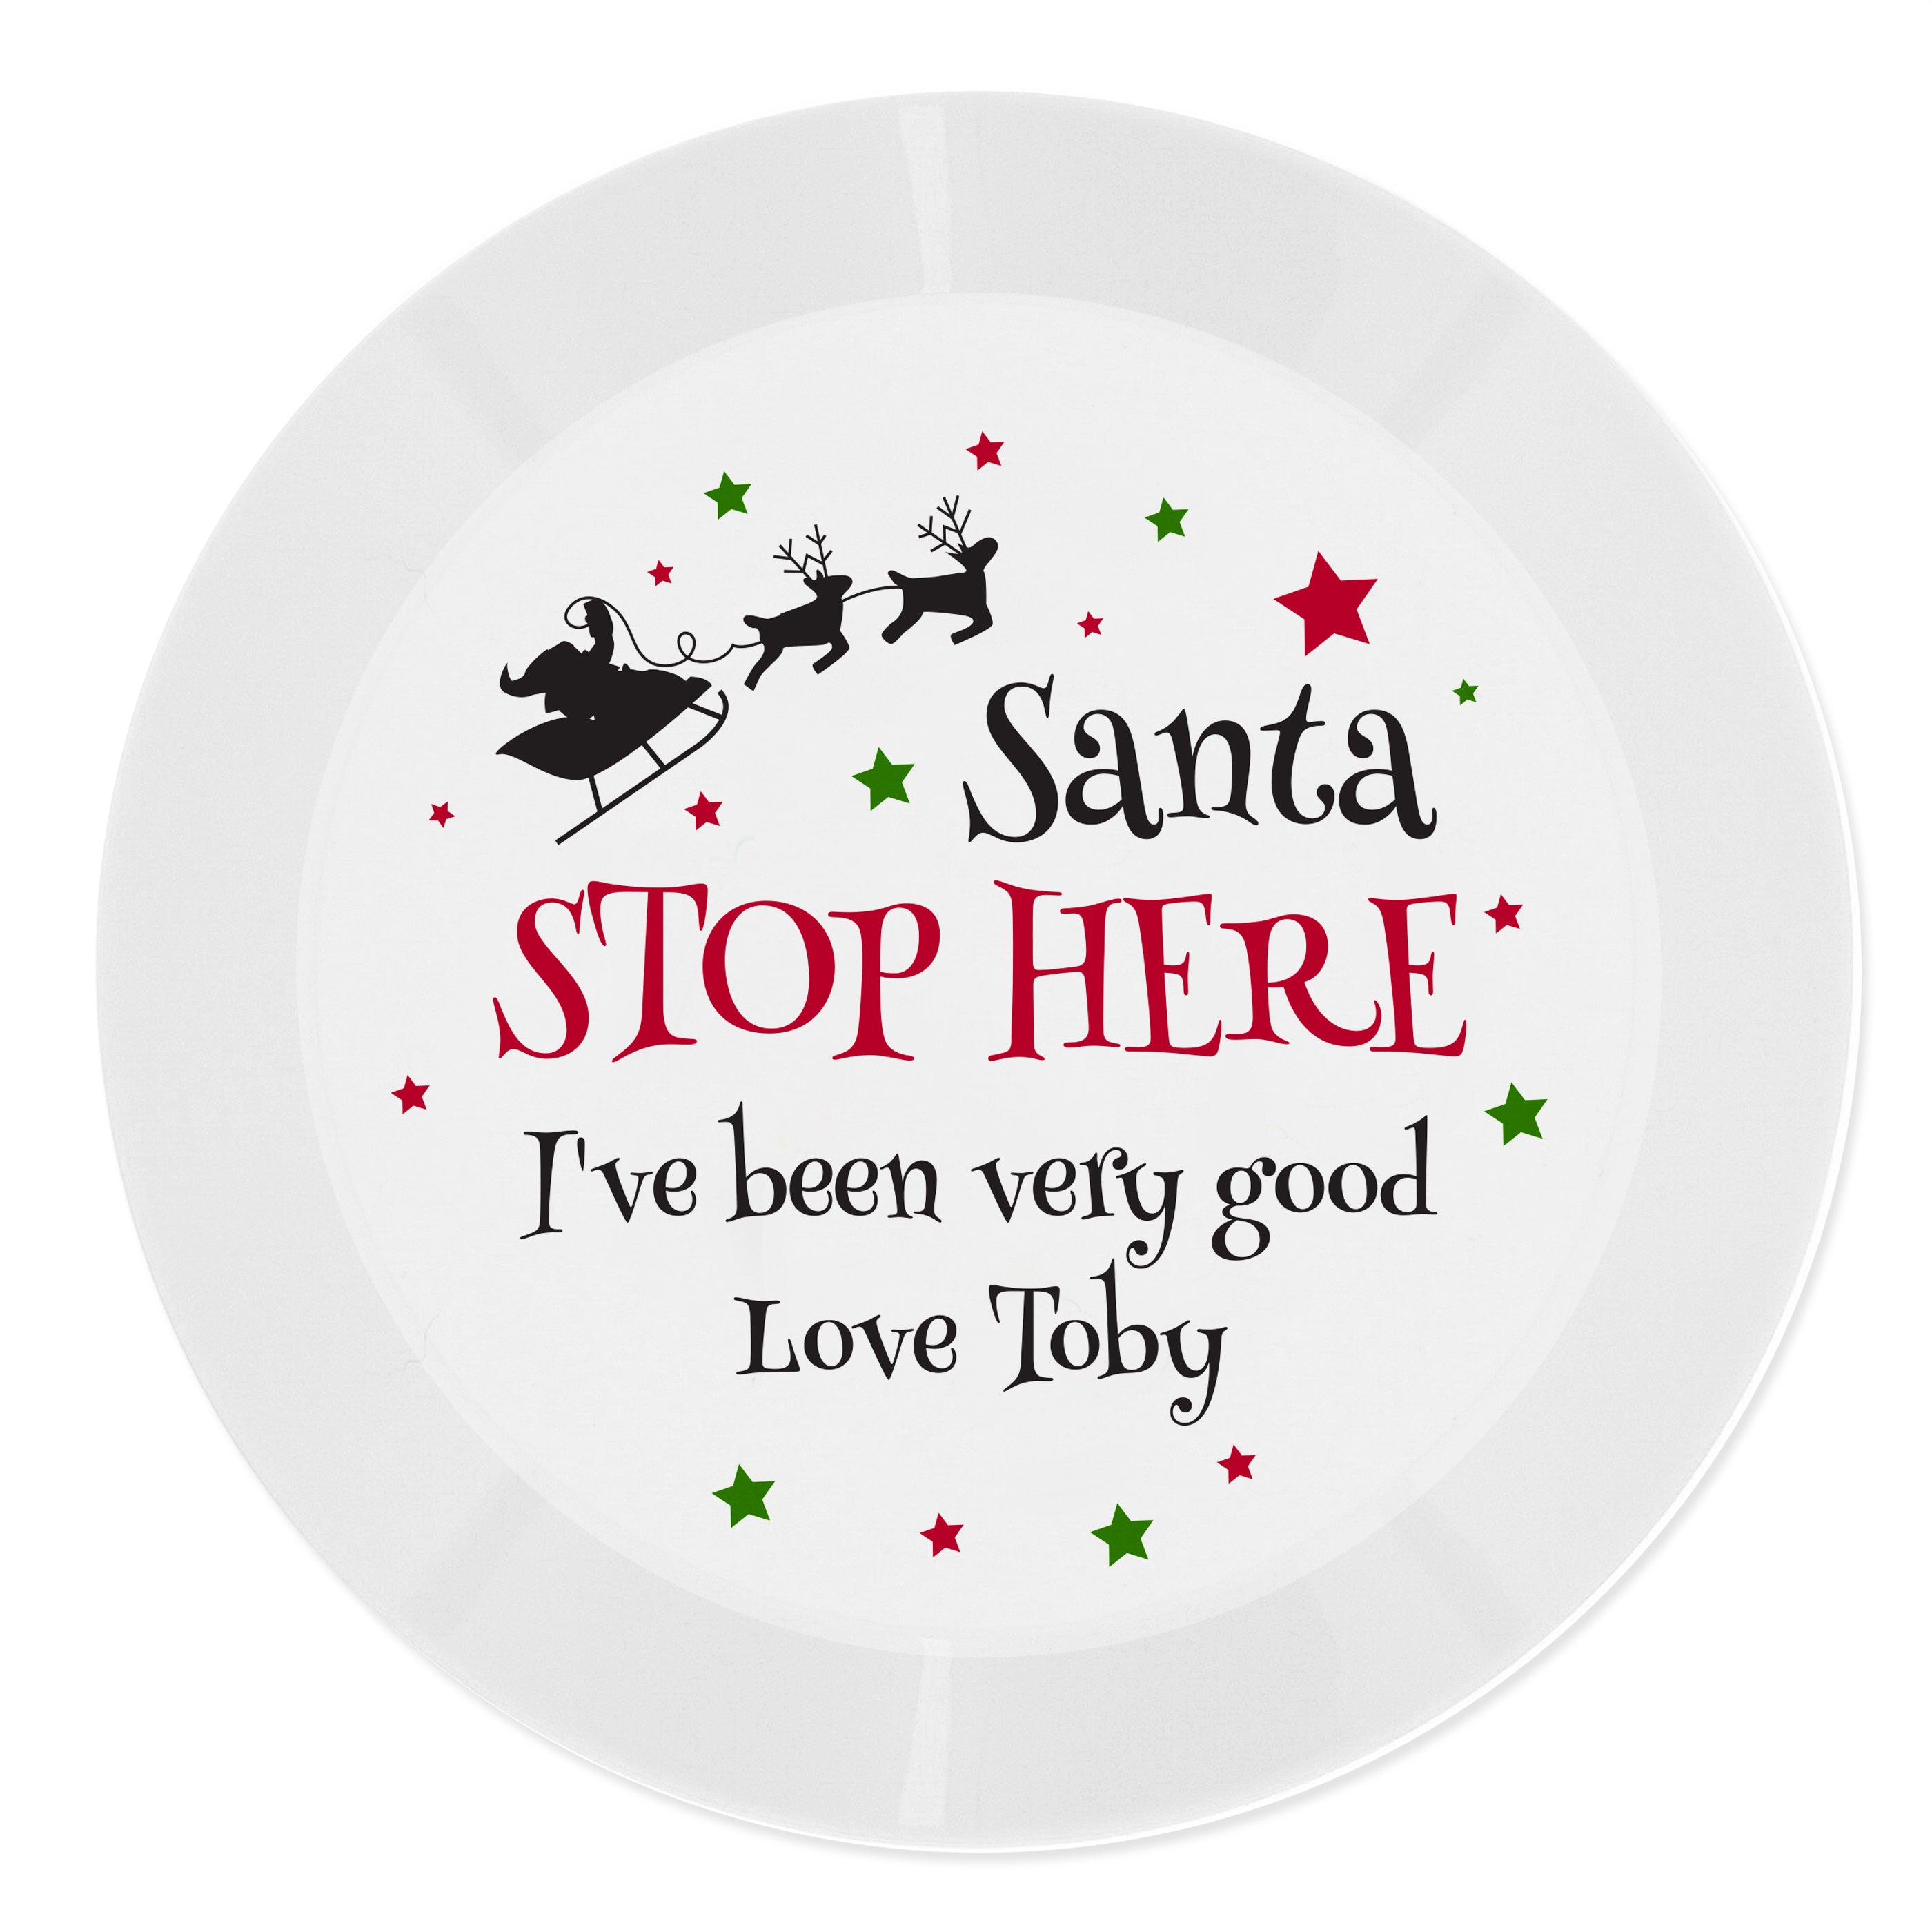 Personalised Santa Stop Here Plastic Plate